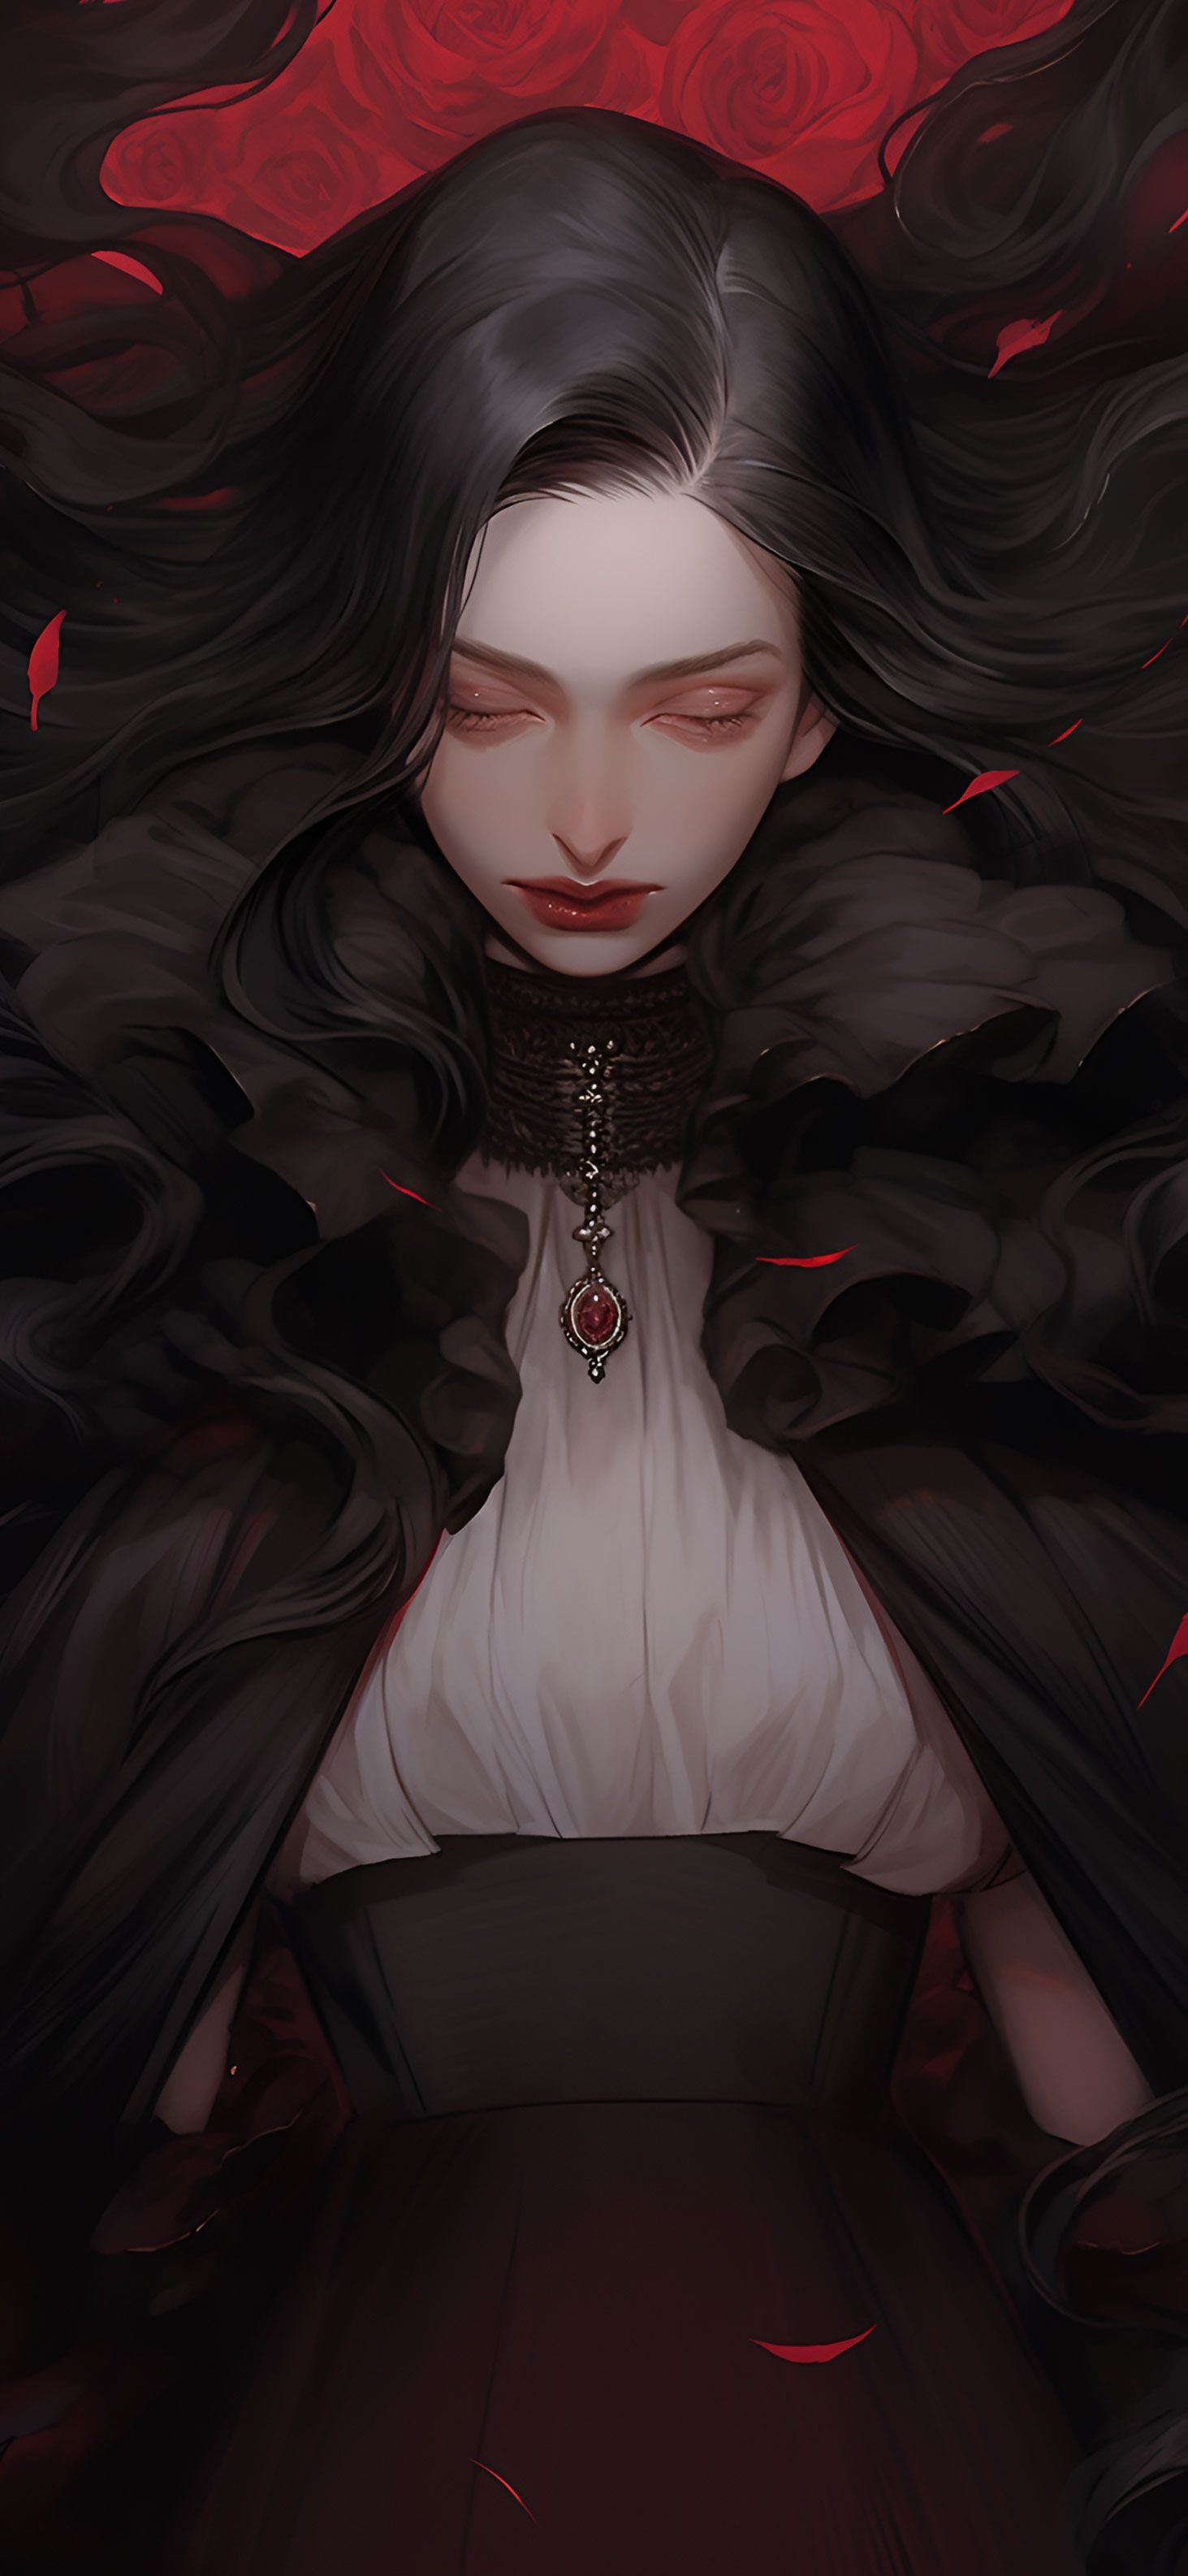 Vampire Girl Sleeping in a Coffin Wallpaper